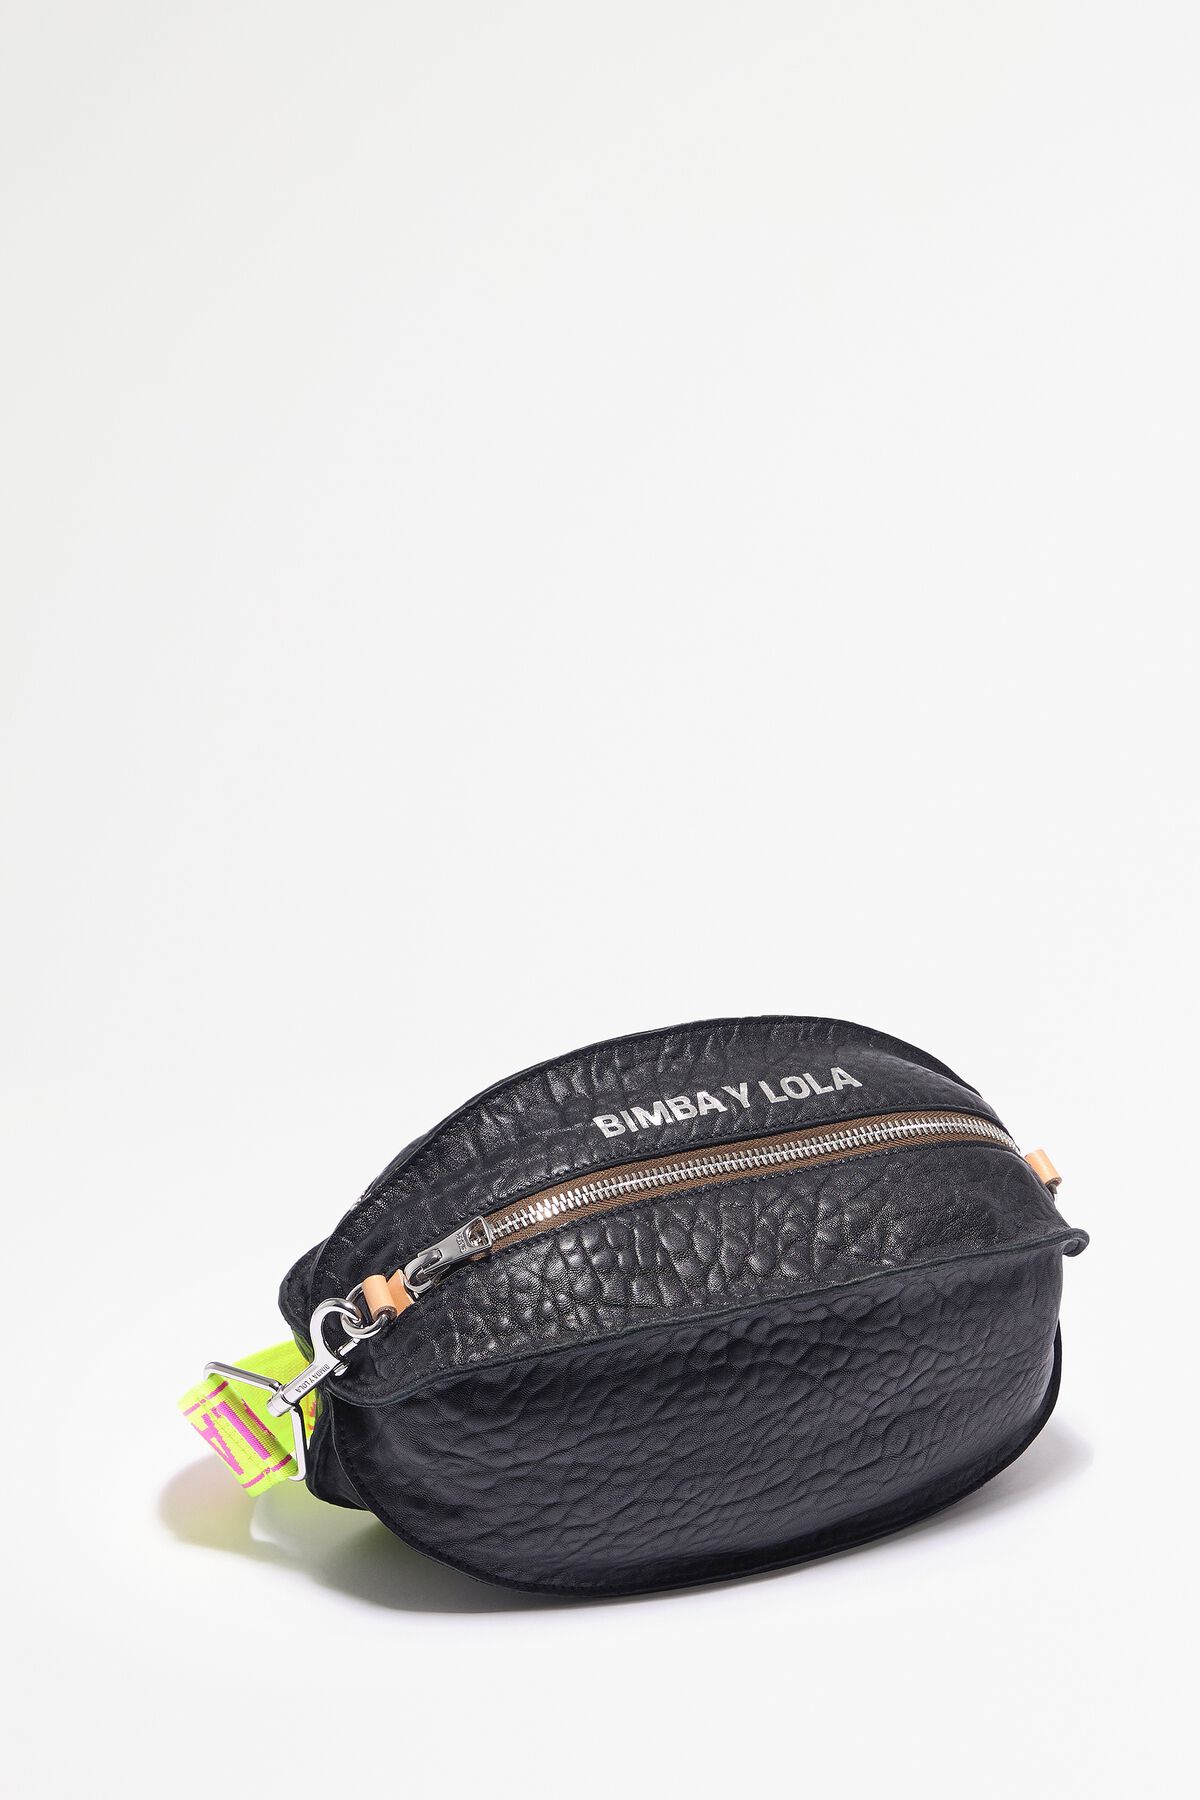 L black Pelota bag